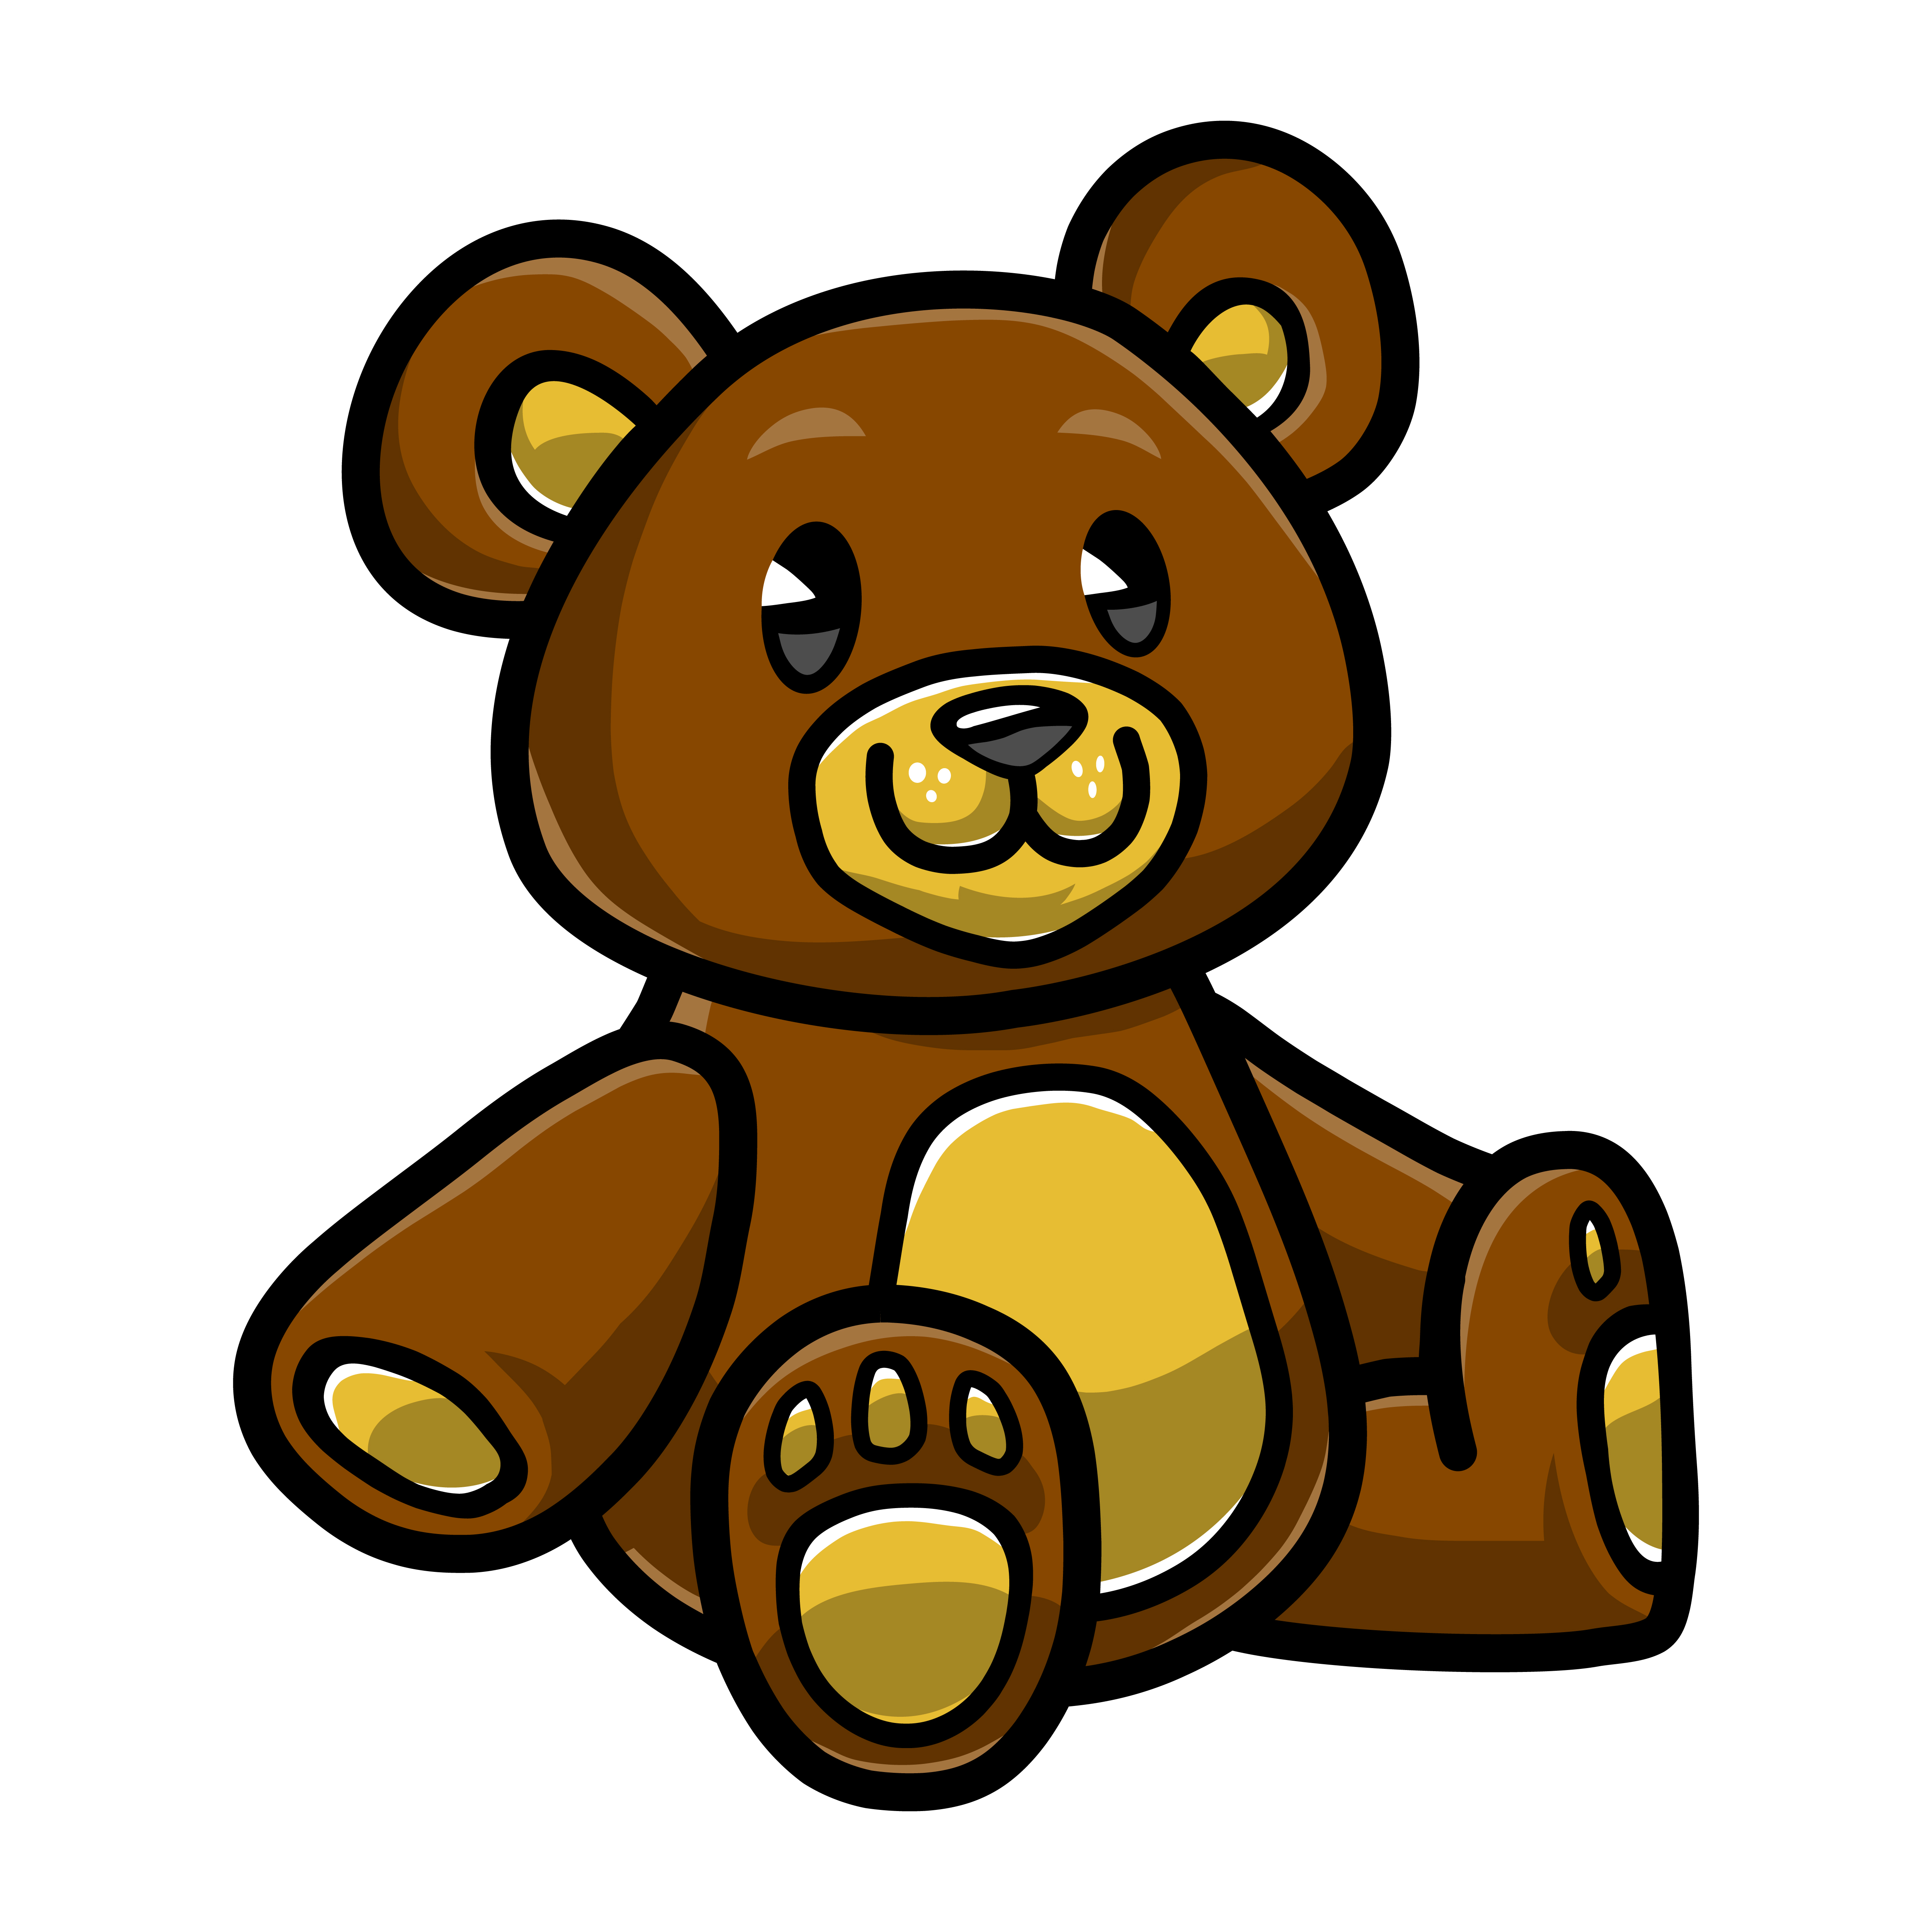 Download Cute Teddy Bear 546263 - Download Free Vectors, Clipart ...